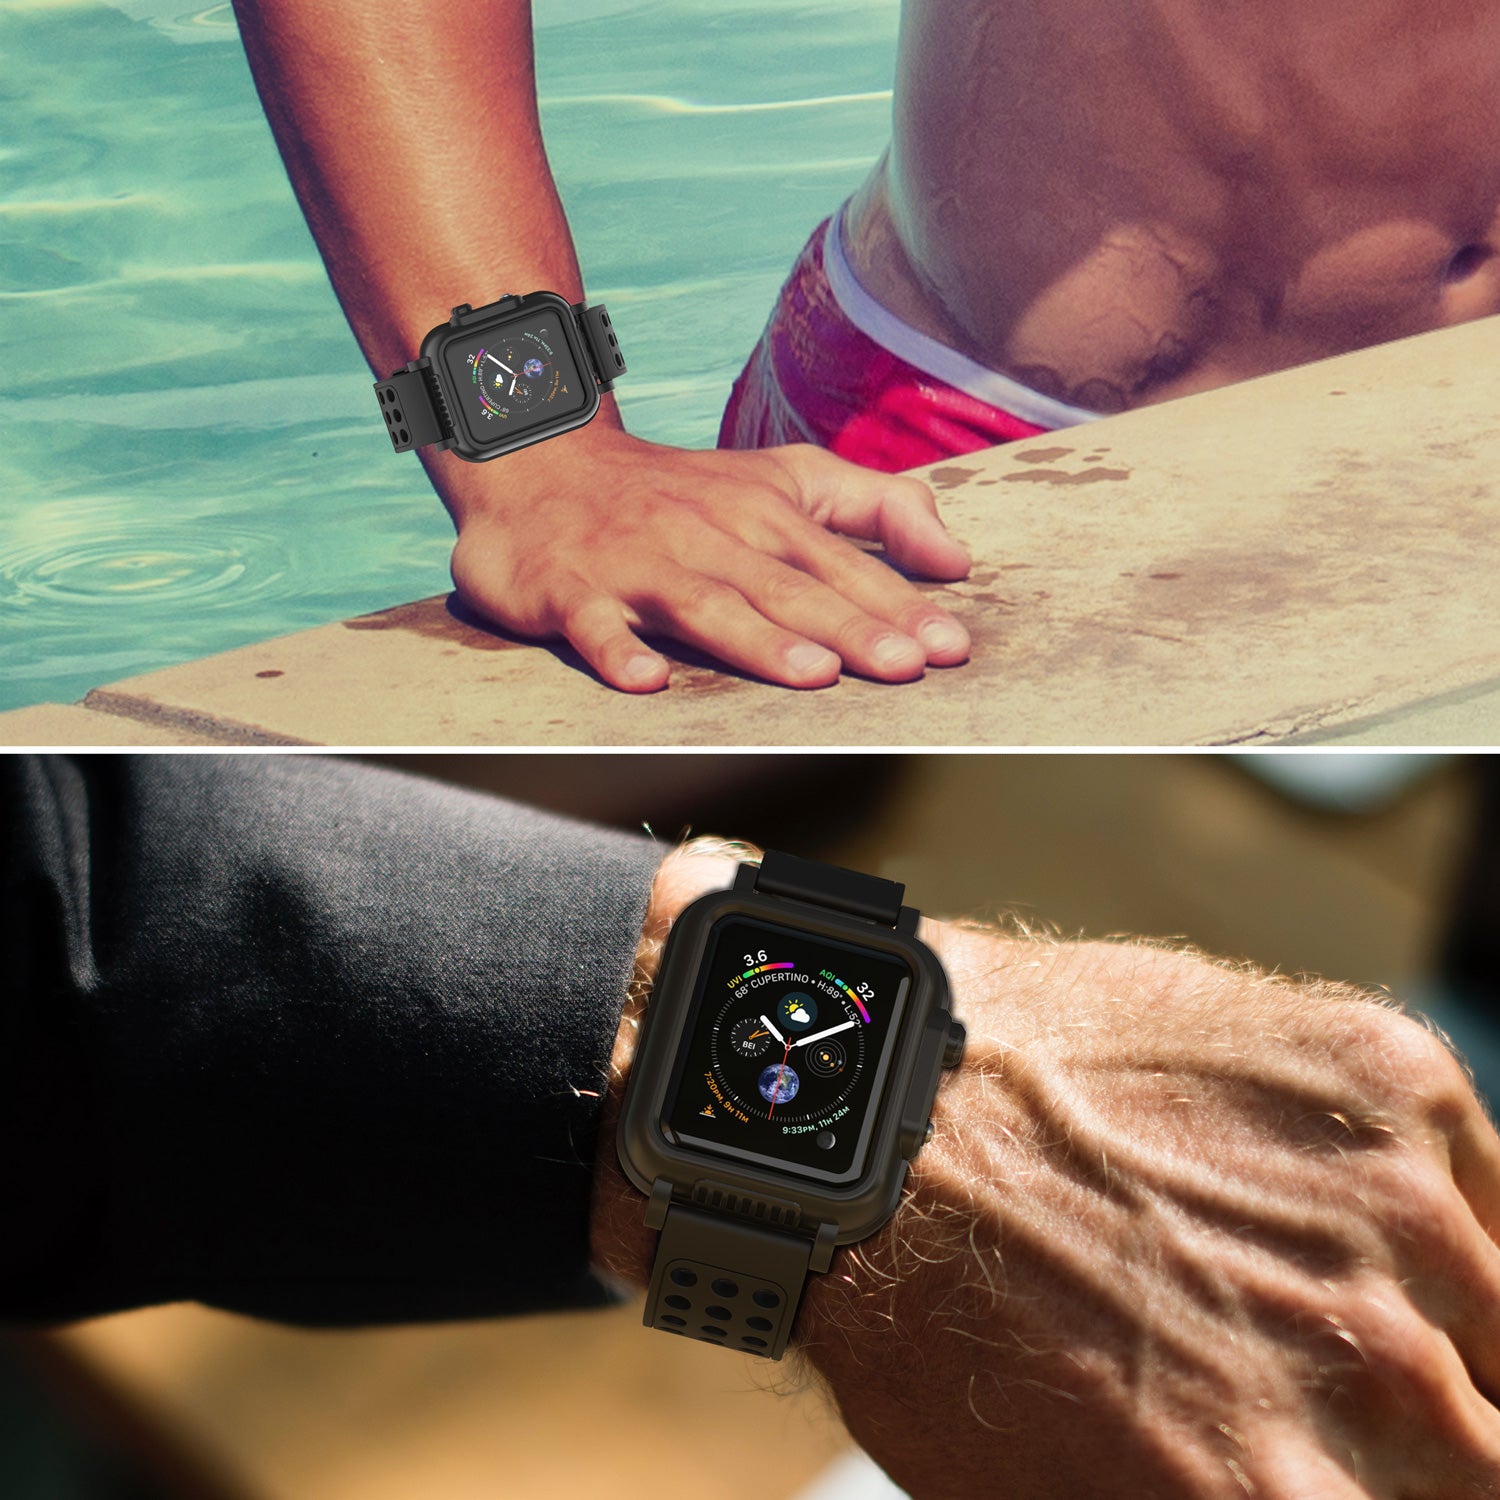 Punkcase Waterproof Case for Apple Watch Series 4 & 5 (44mm) (Black)